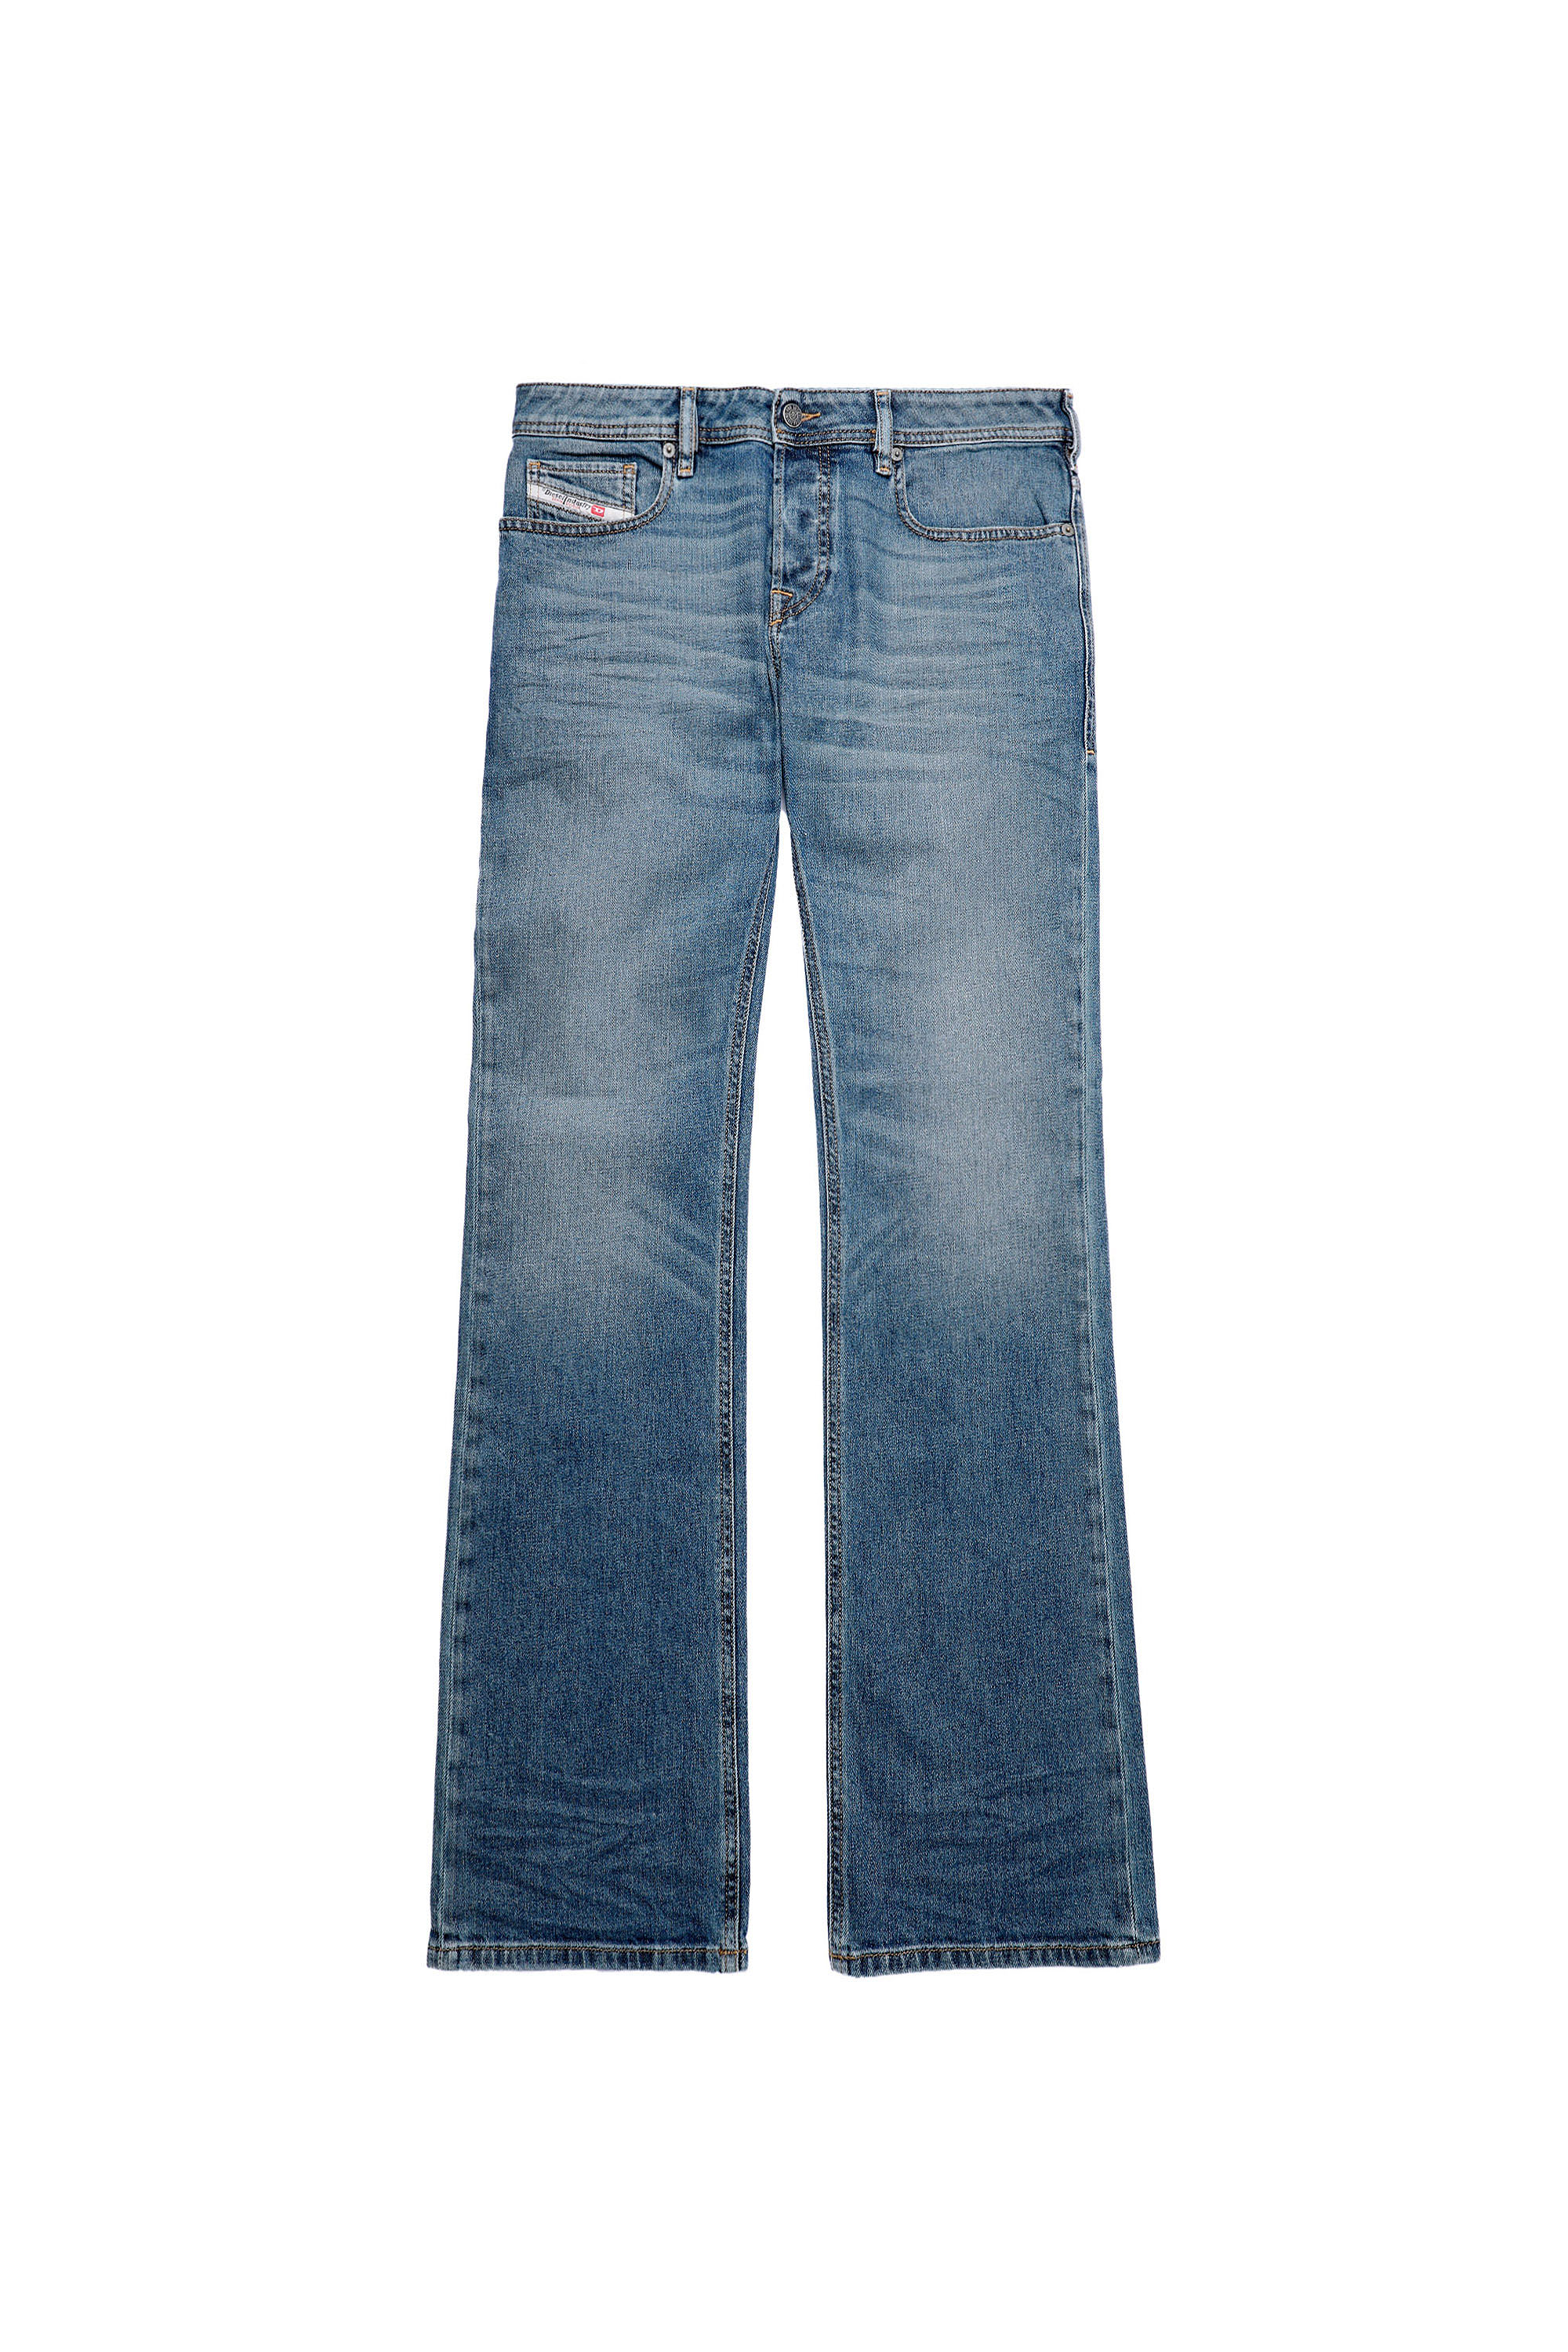 Diesel - Zatiny 009EI Bootcut Jeans,  - Image 6